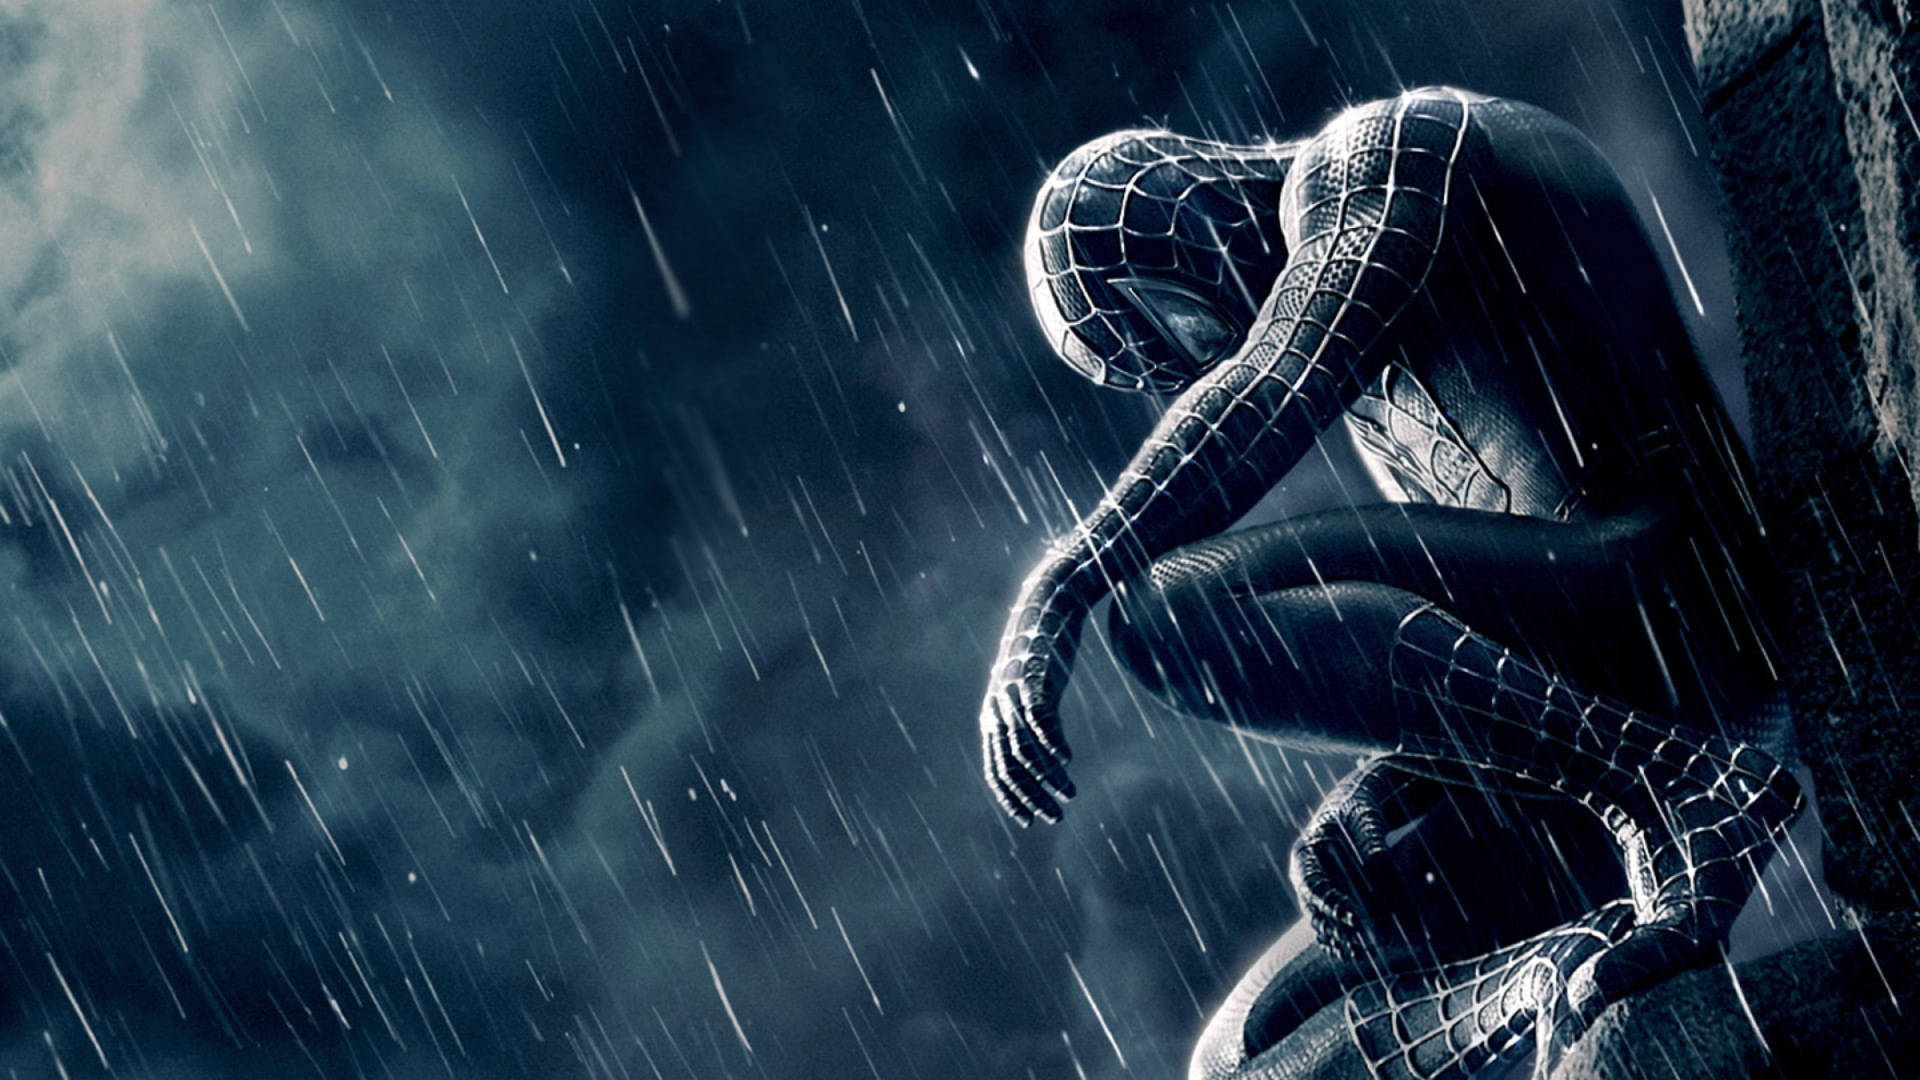 Spider-Man Digital Movie Cover wallpaper